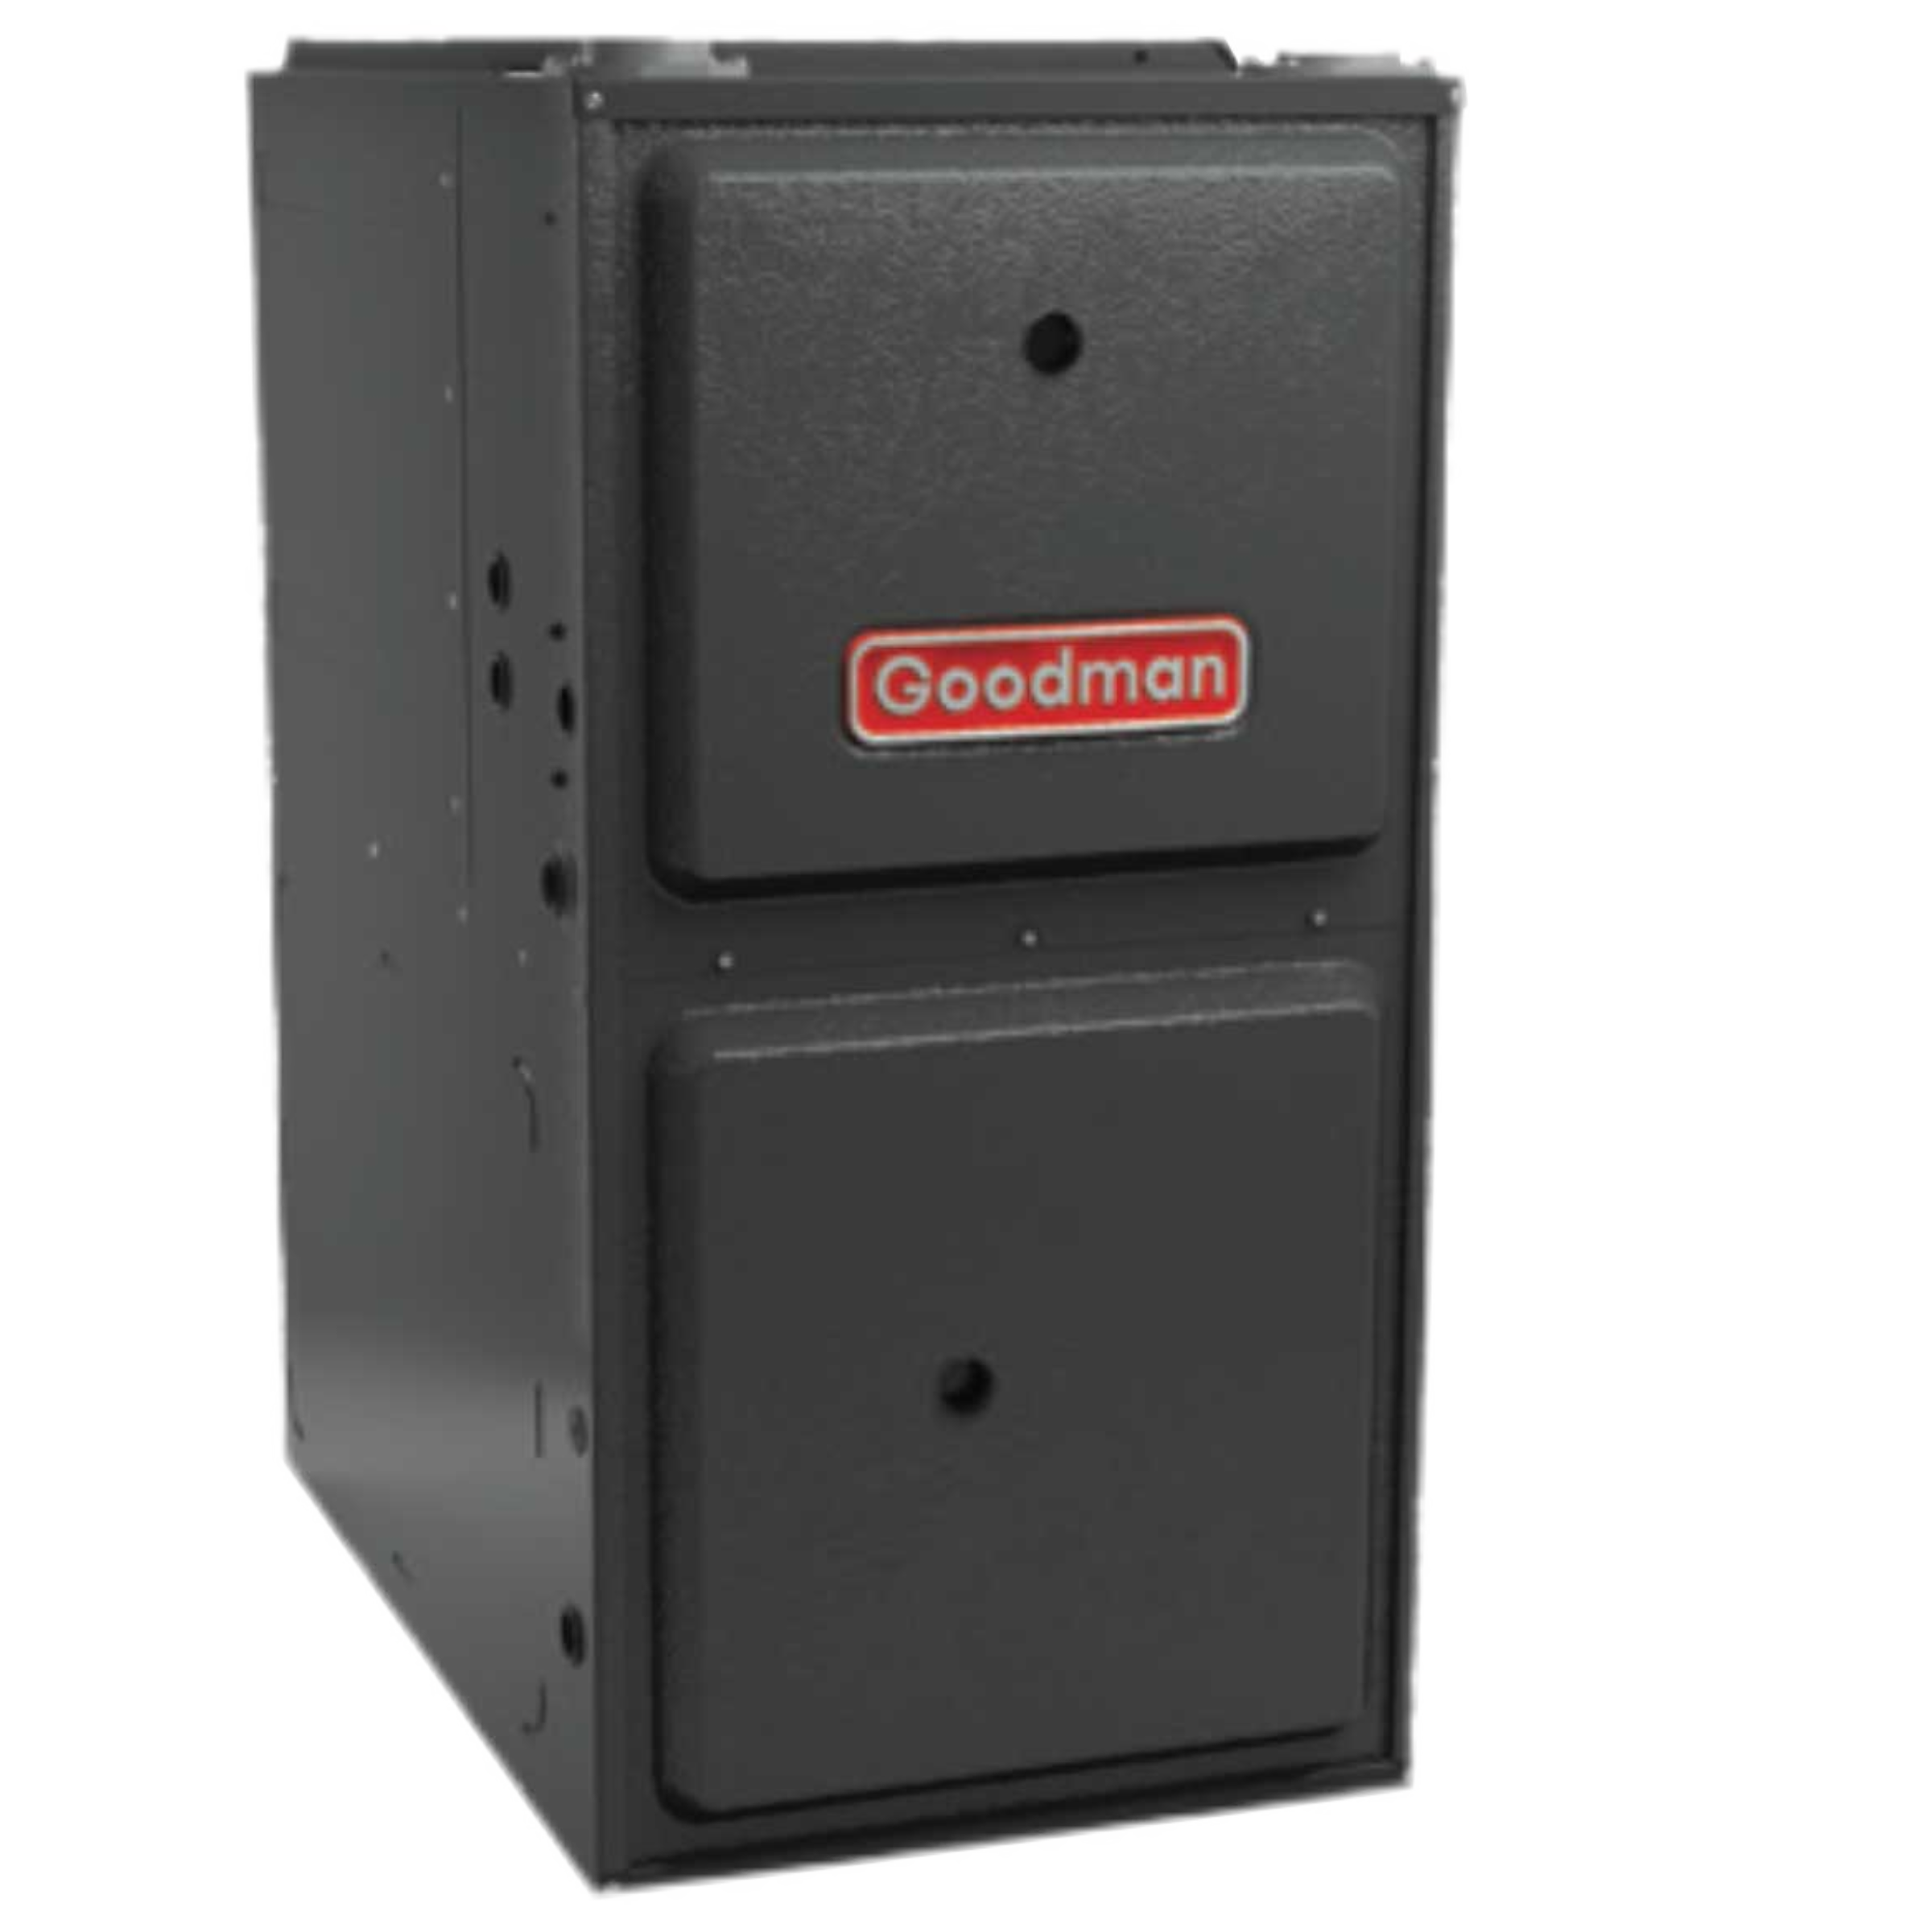 Goodman Gas Furnace GMEC96 Series, Upflow/Horizontal, 96% AFUE, Multi-Speed ECM, Two-Stage Gas Valve